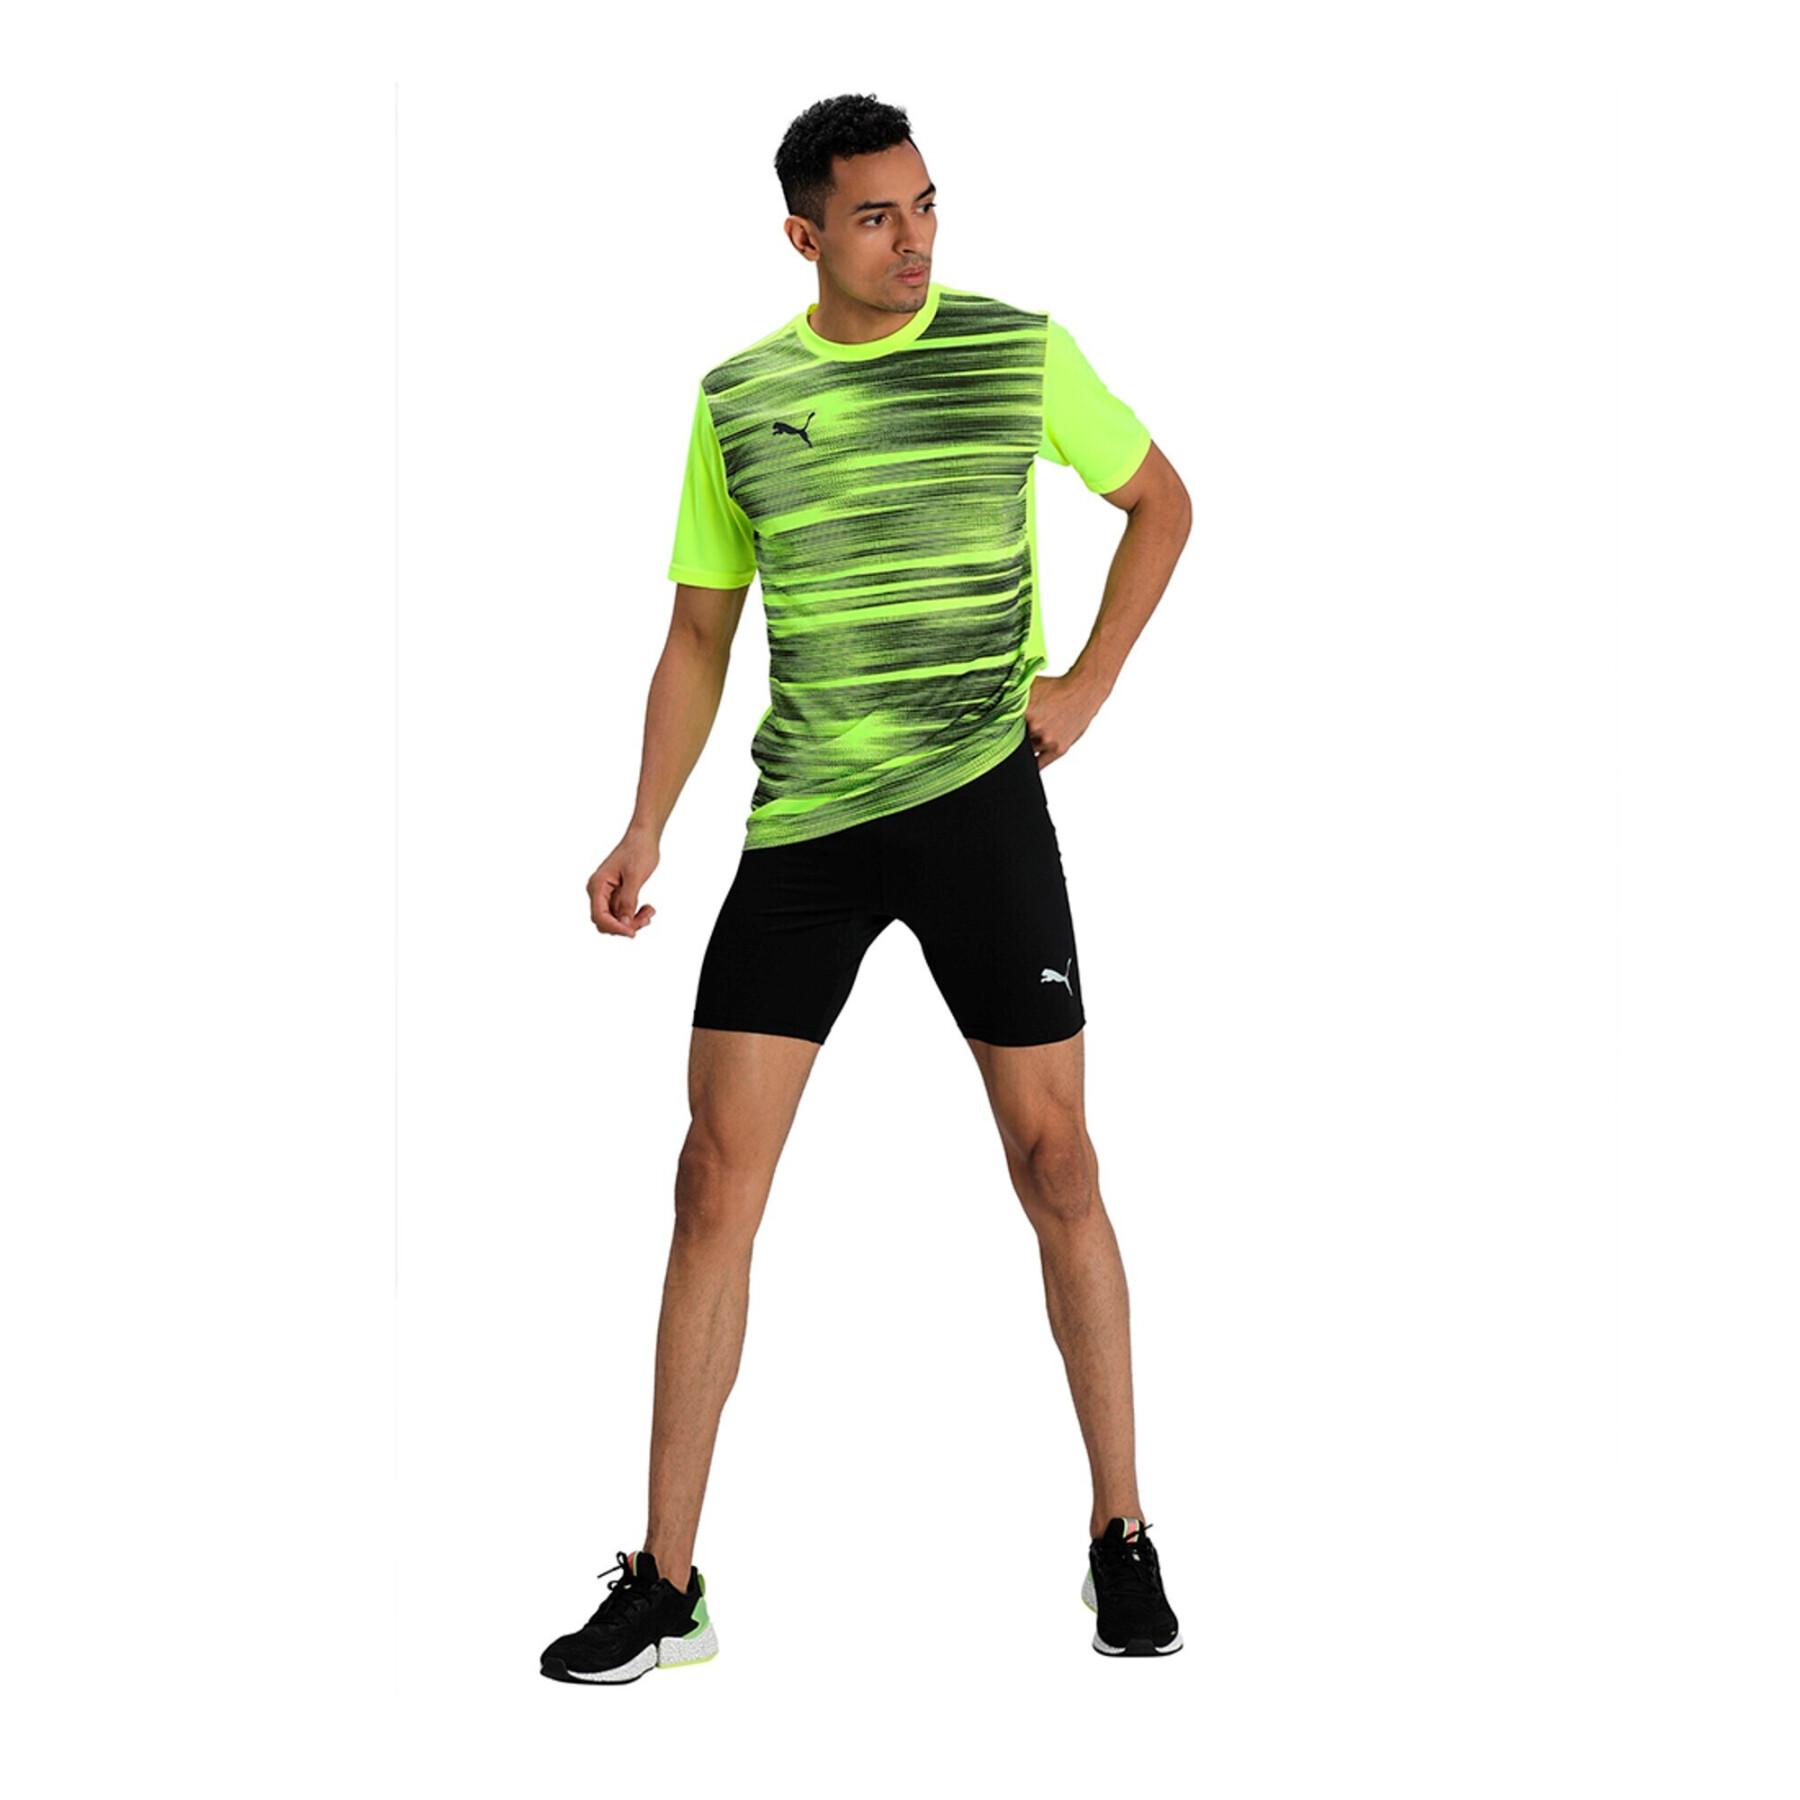 Compression Shorts Puma - Puma - Training shorts - Teamwear